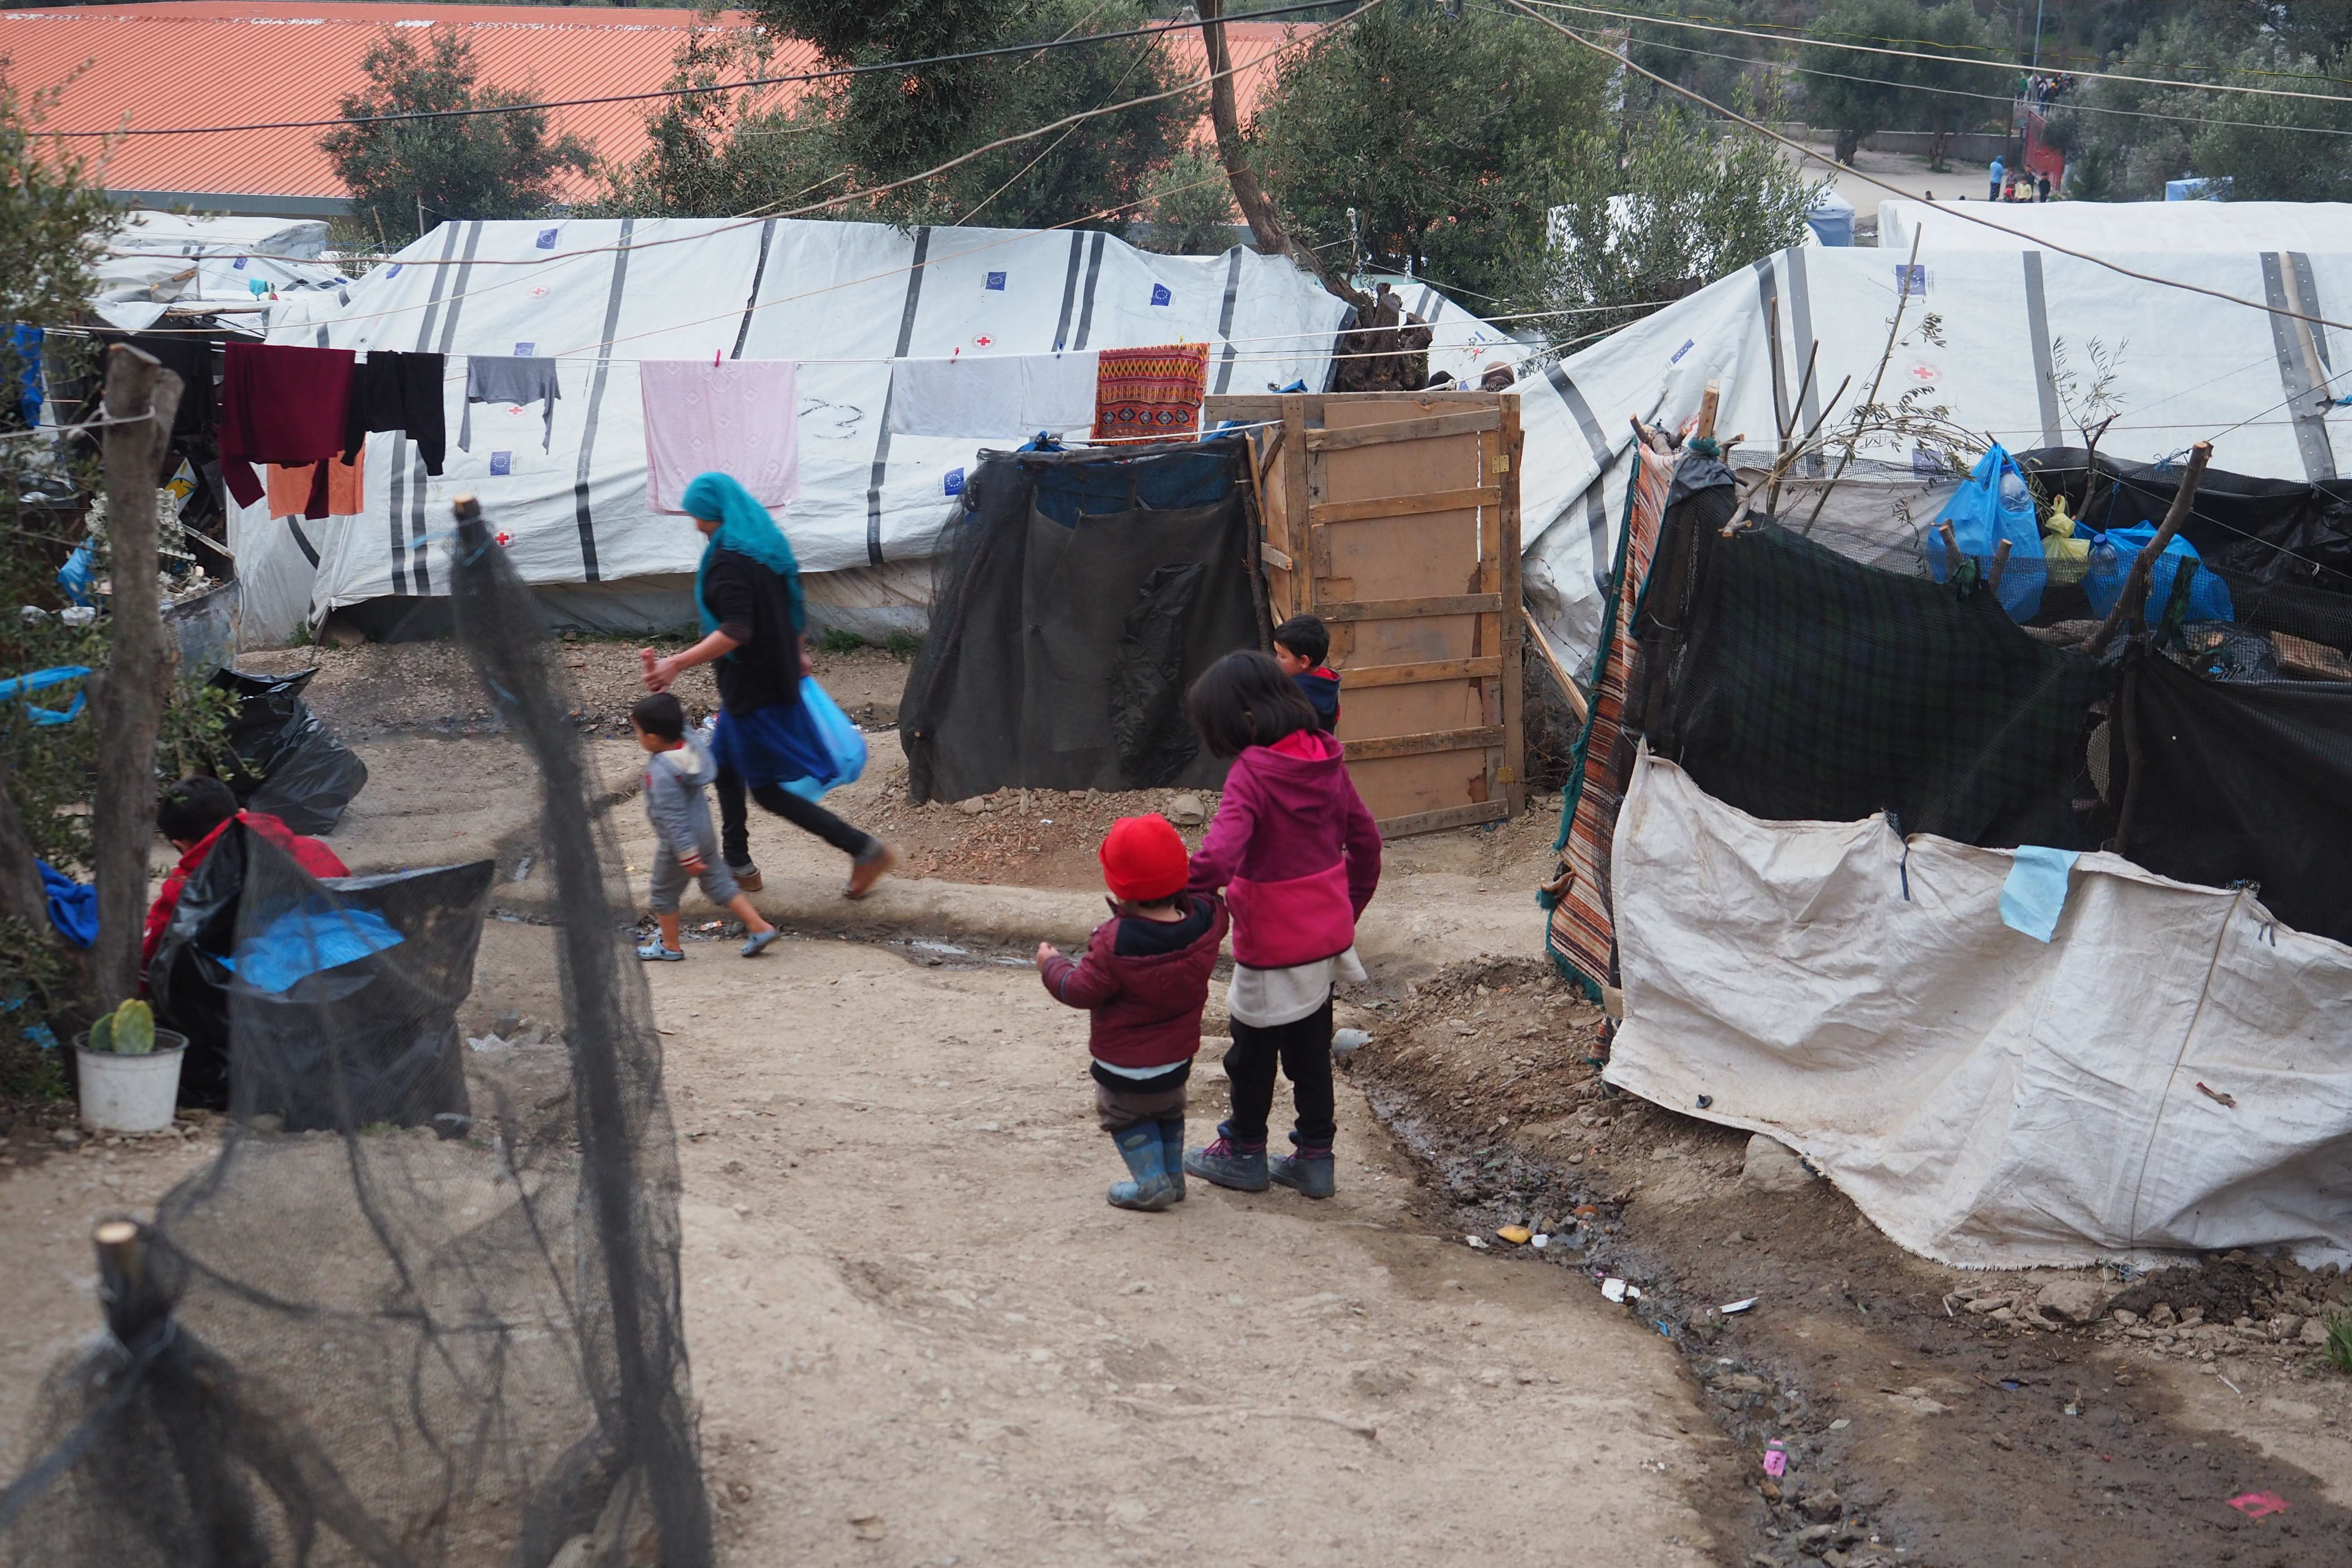 Kinder in Camps auf Griechenland, WAZ-Spendenaktion in Lesbos WAZ-Reise